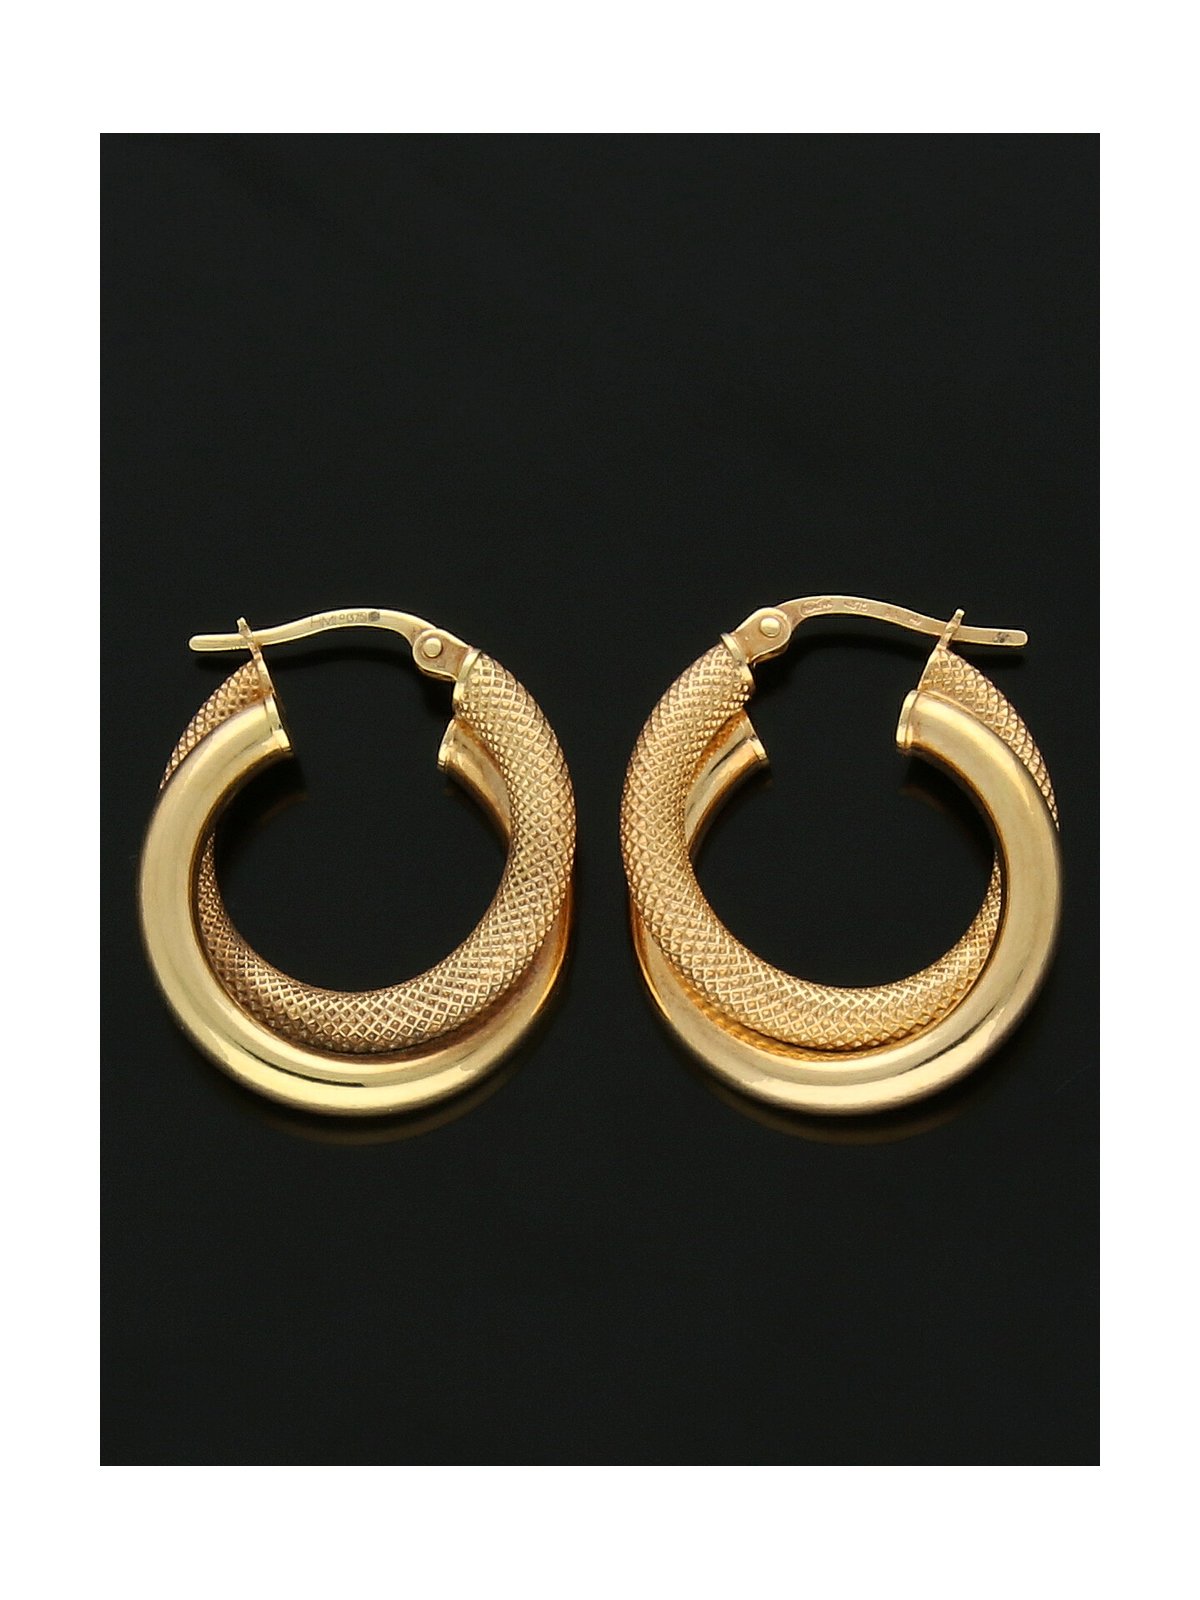 Plain & Patterned Double Hoop Earrings 20mm in 9ct Yellow Gold